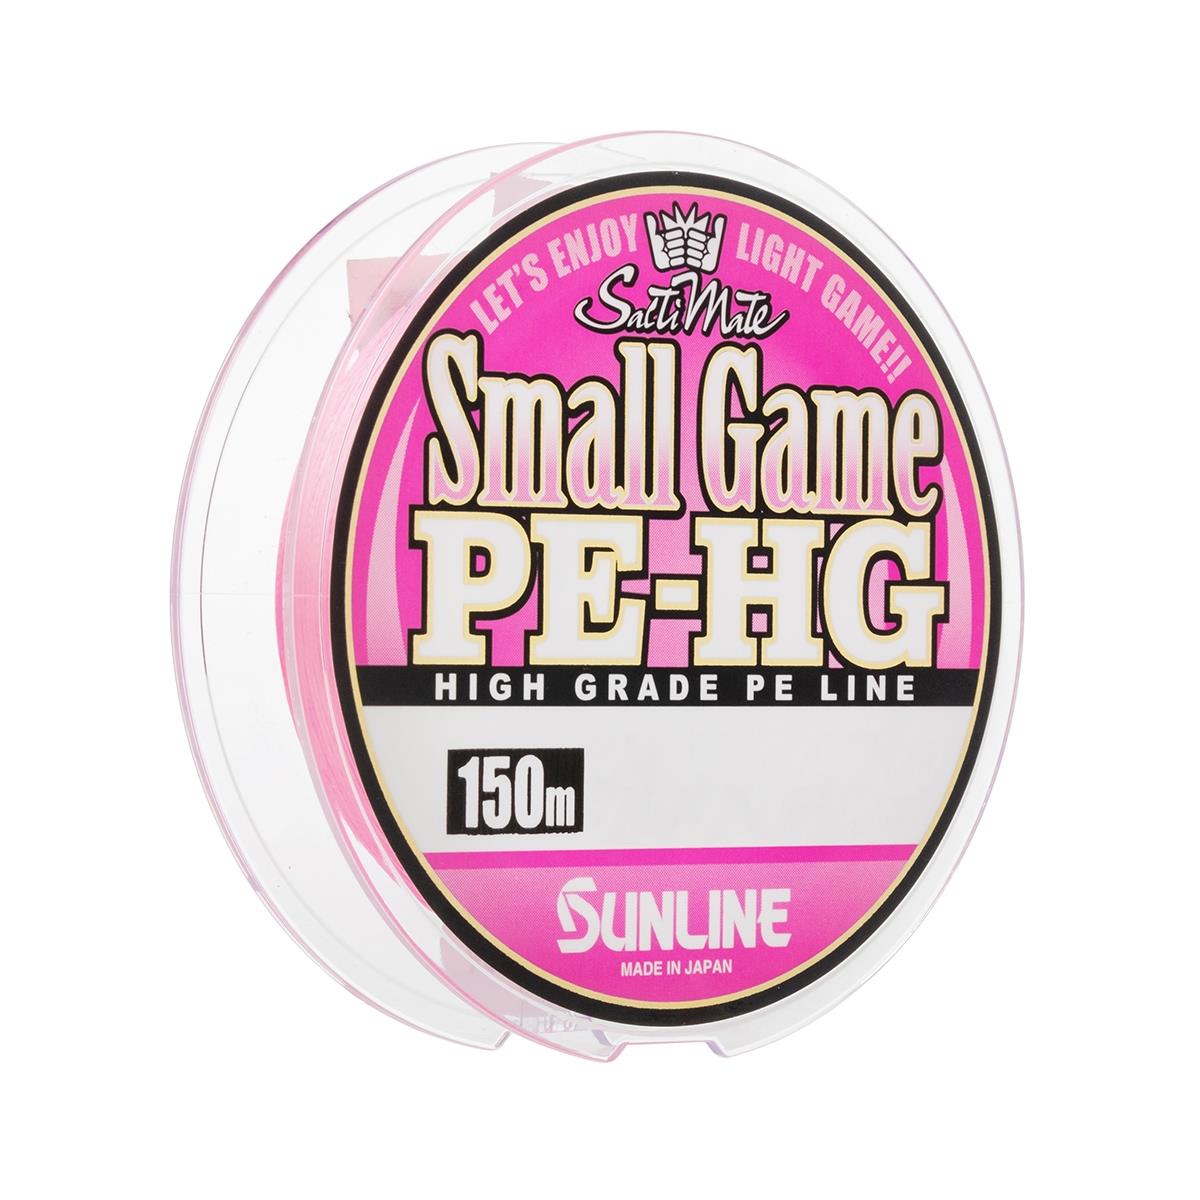 Шнур NEW SMALL GAME PE HG 150M 6LB/#0.4 Sunline шнур зубр полиамидный плетеный повышенной нагрузки без сердечника d 5 катушка 700м